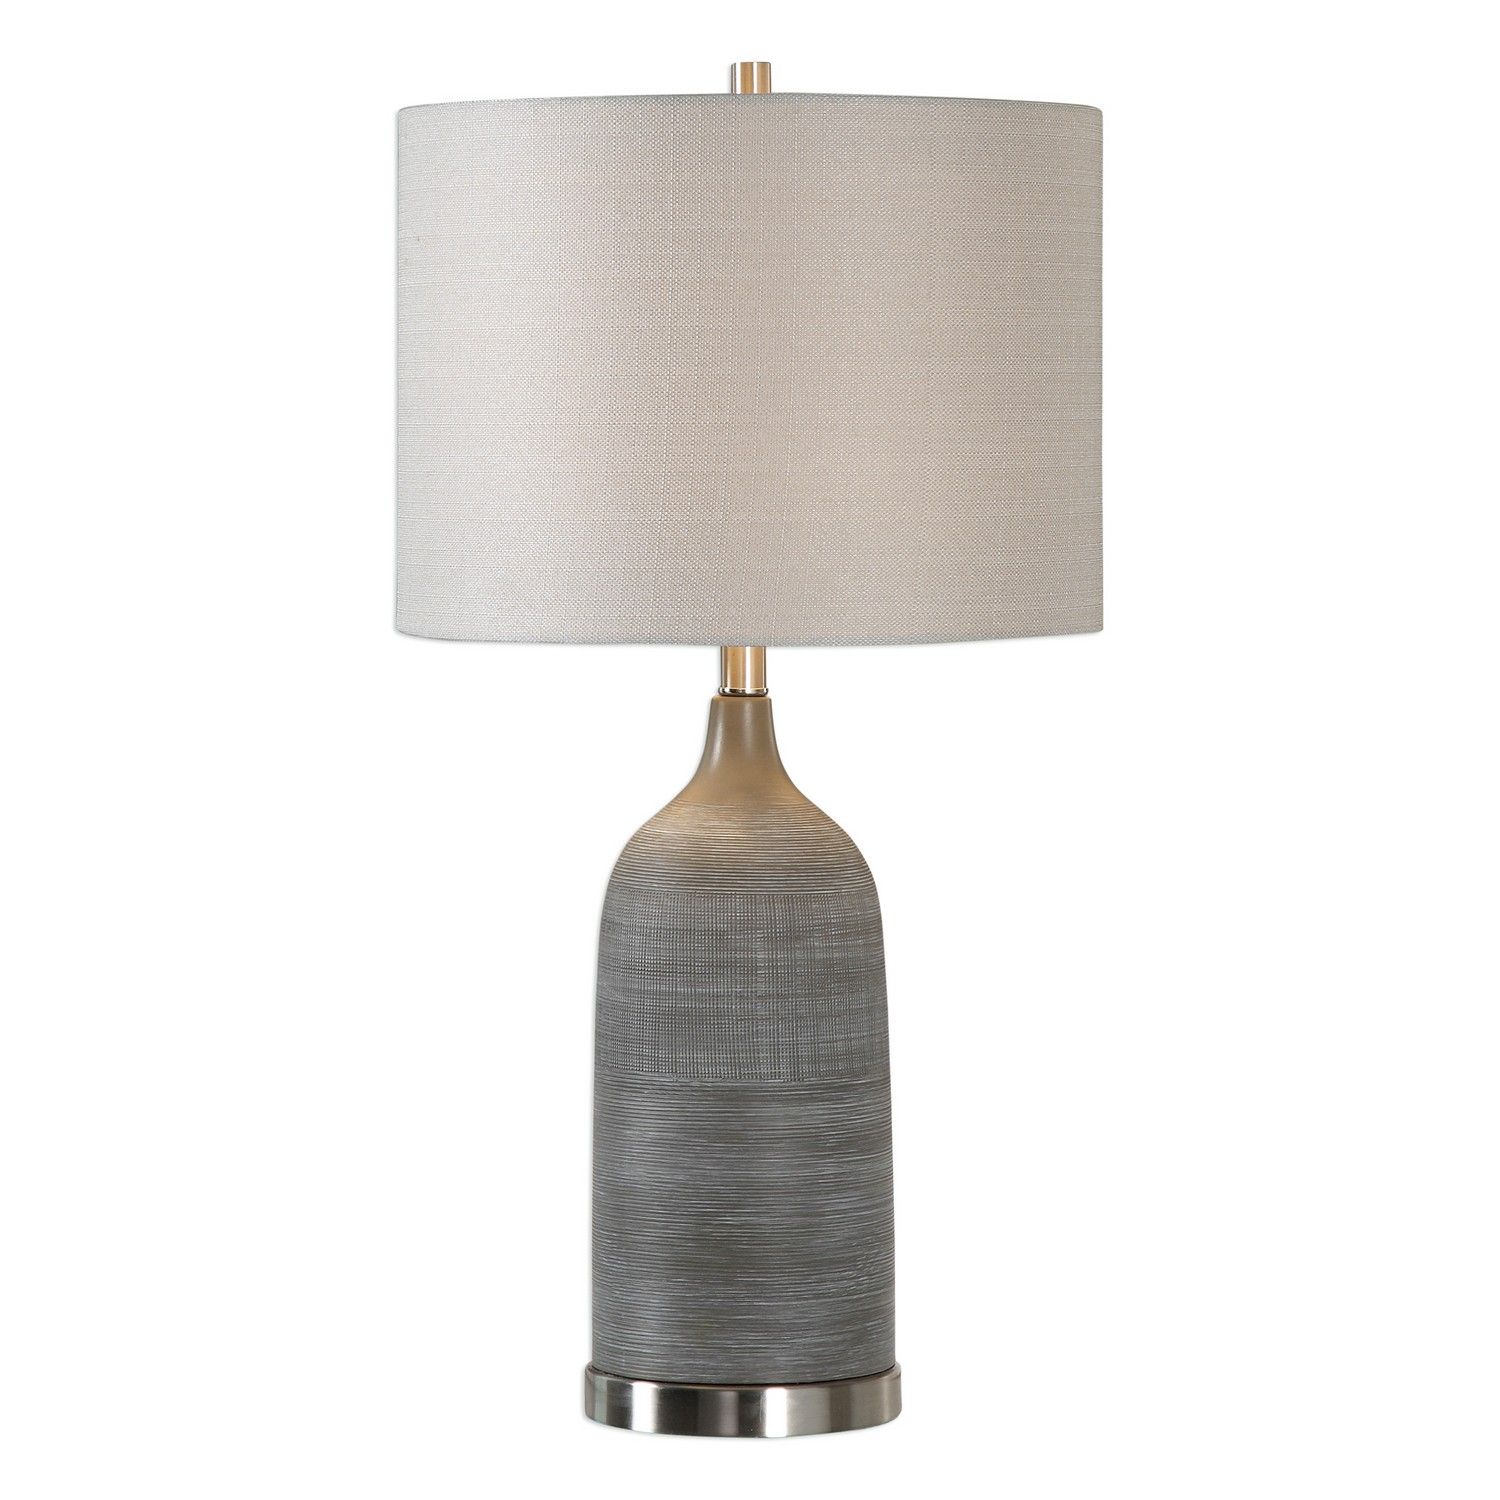 Uttermost W26001-1 Table Lamp - Olive Bronze Glaze